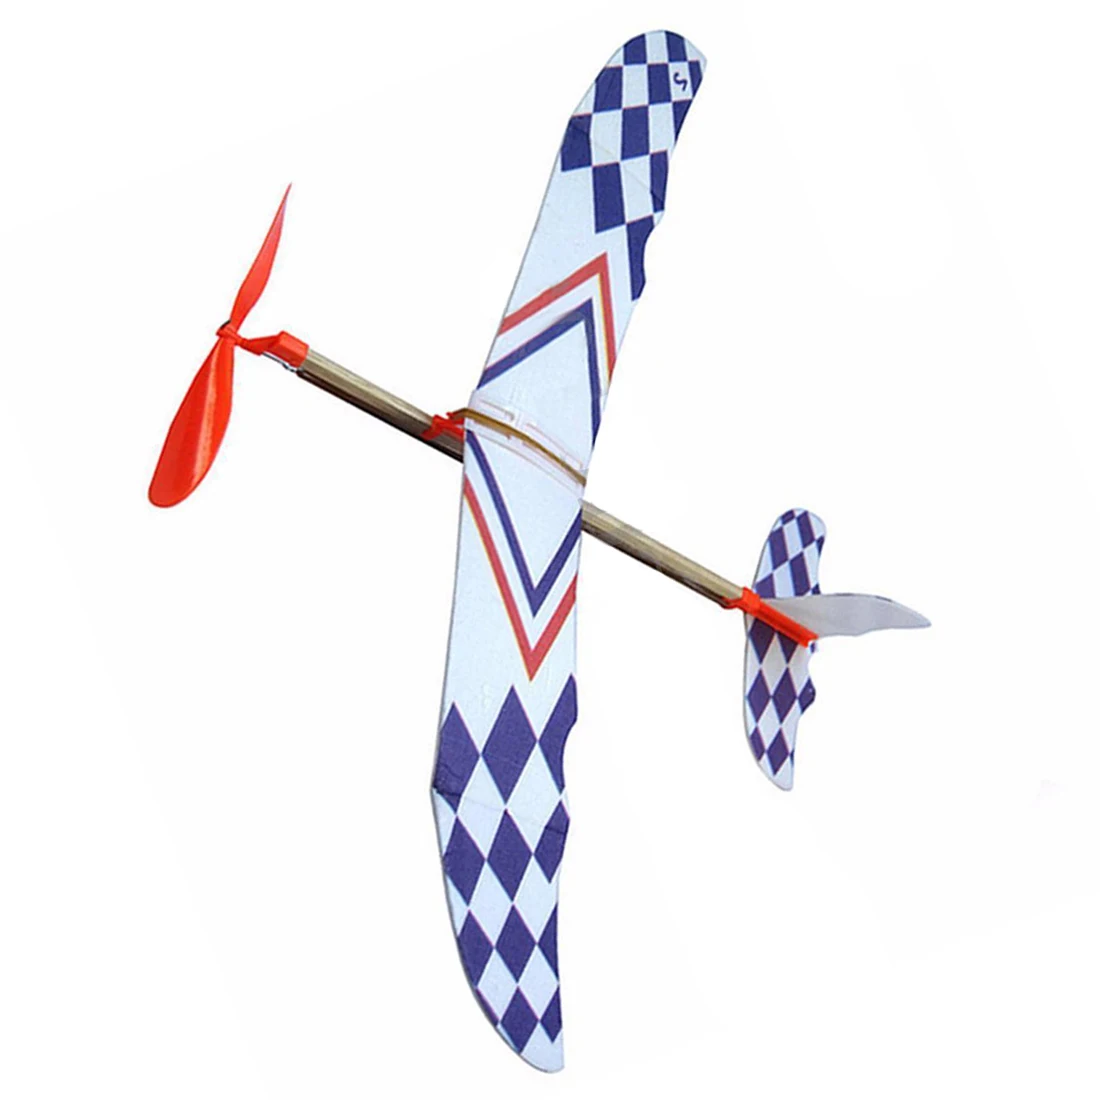 Rubber Band Elastic Powered Flying Plane Kit Airplane Fun Model Kid Toy Gift CS 